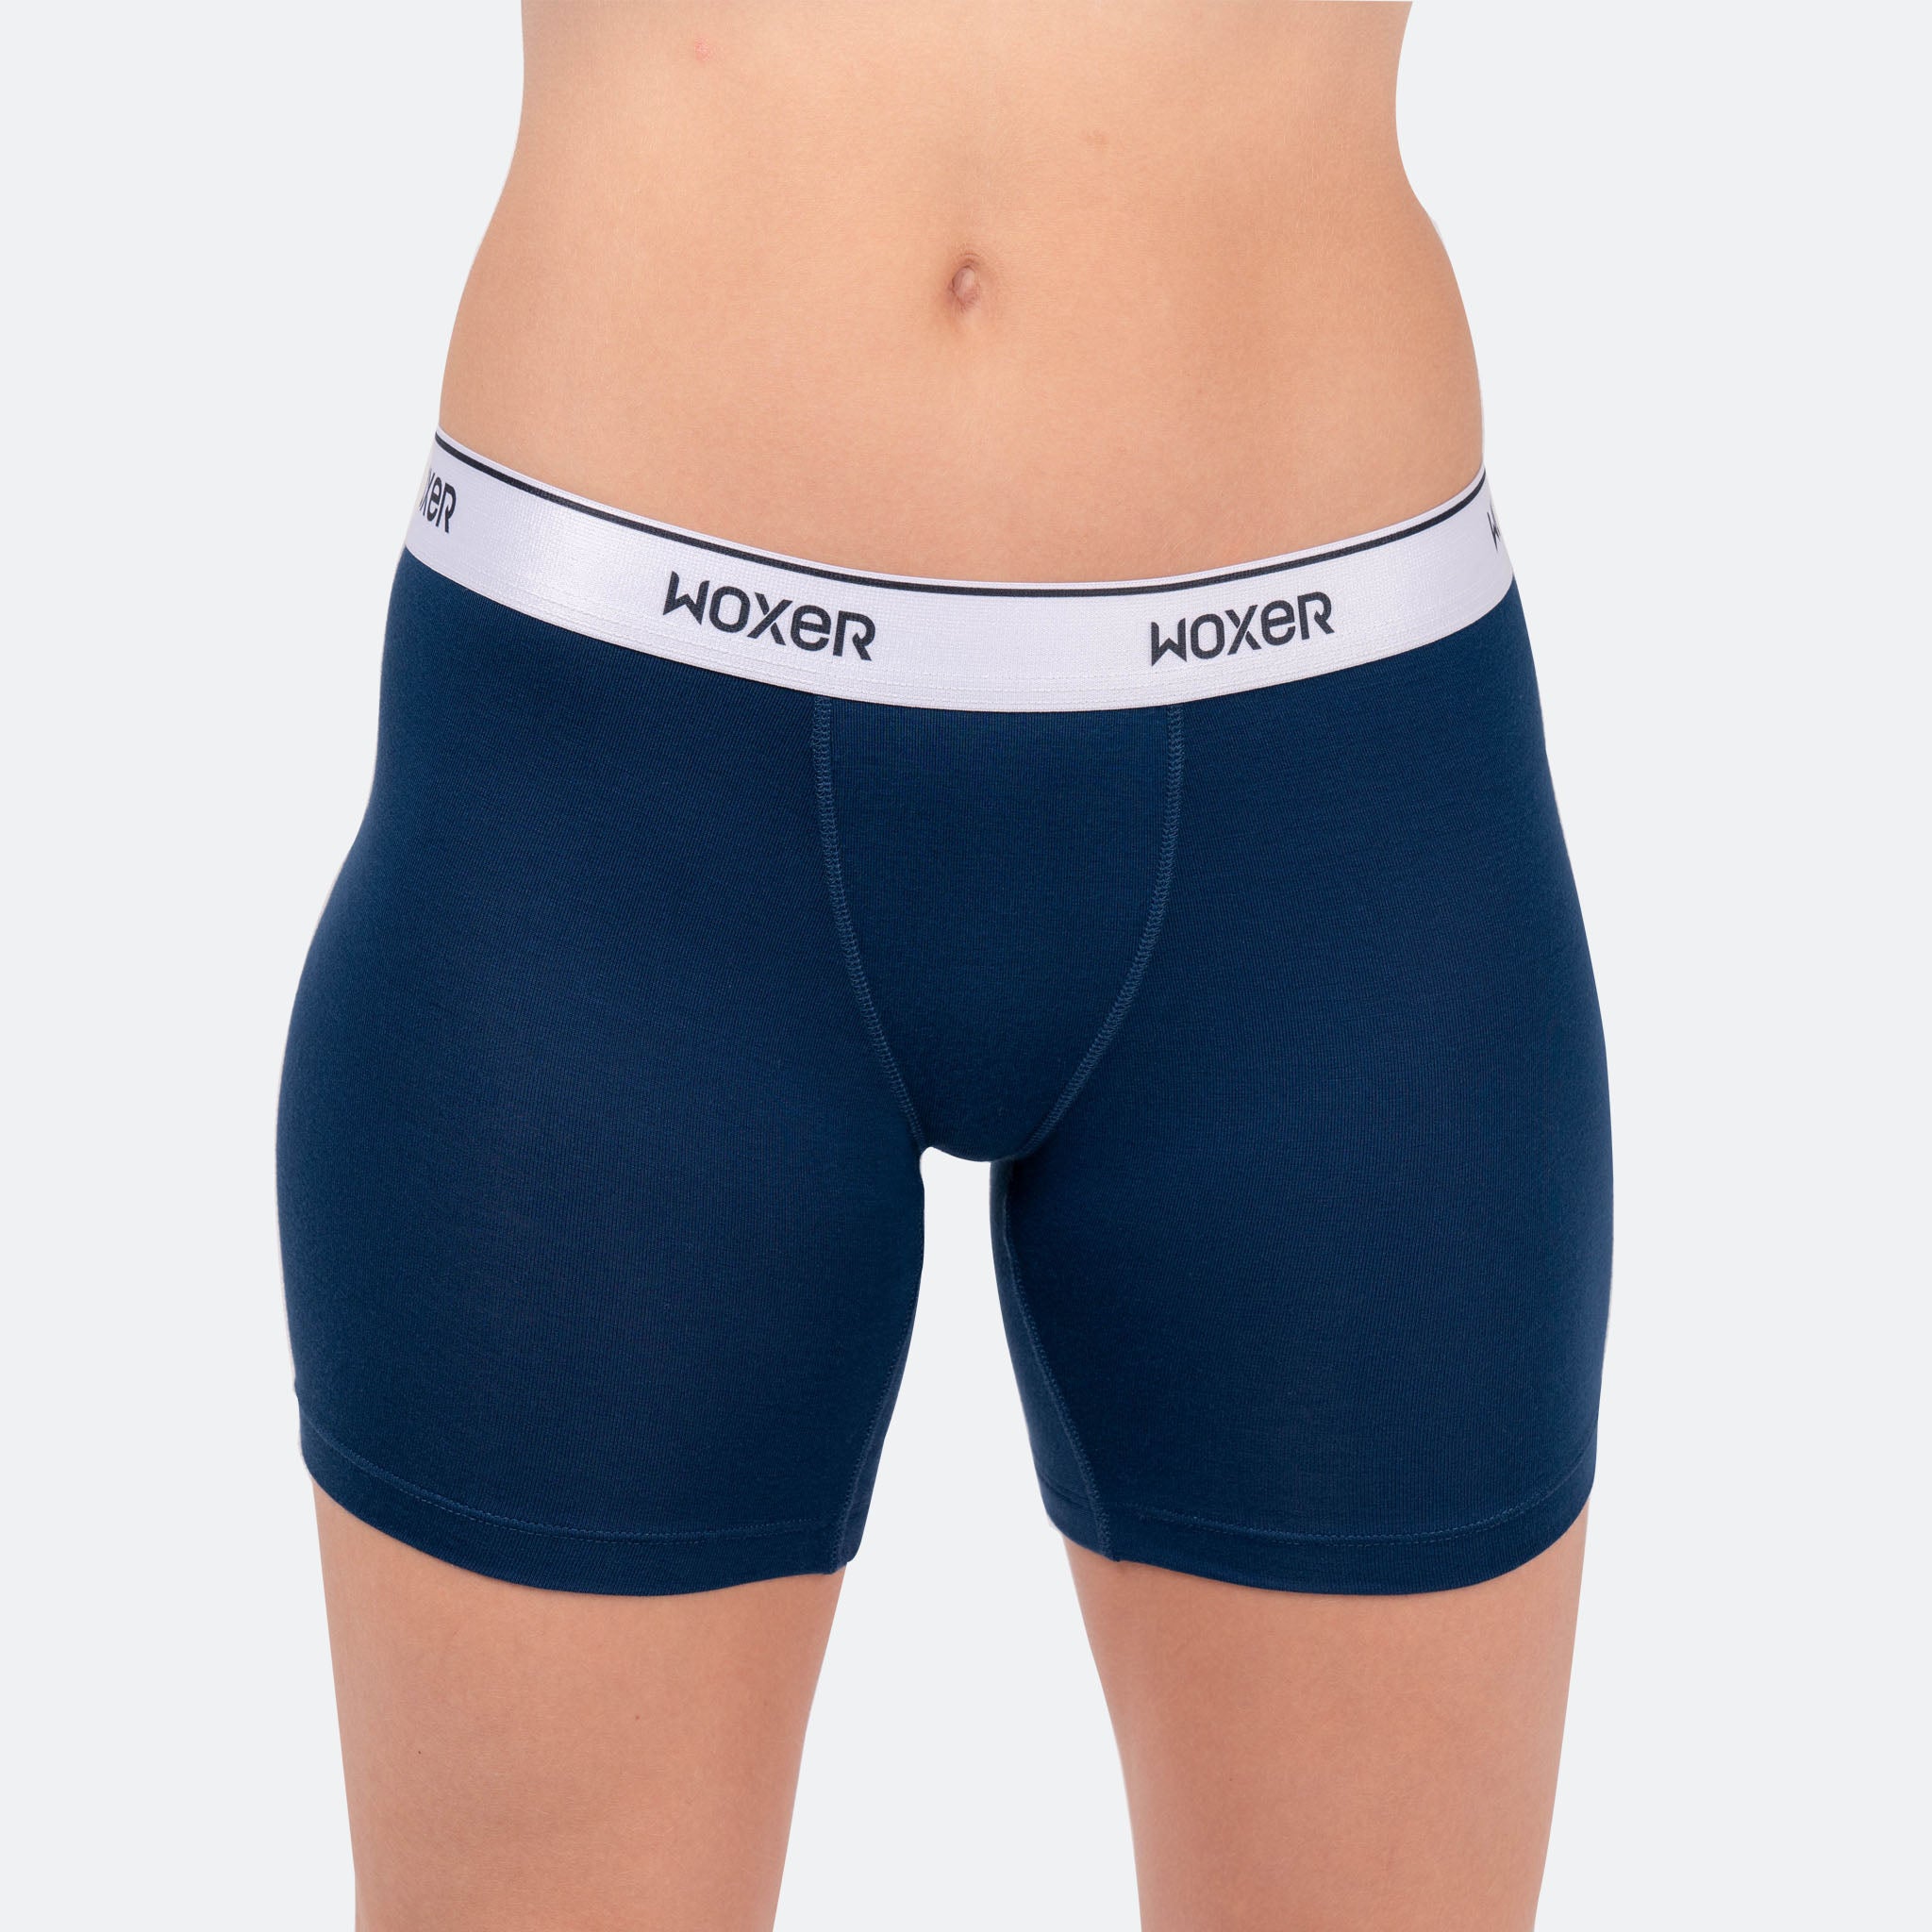 Woxer Women's Boxer Briefs Underwear, Baller 5” High-Waisted Boyshorts,  Exercise